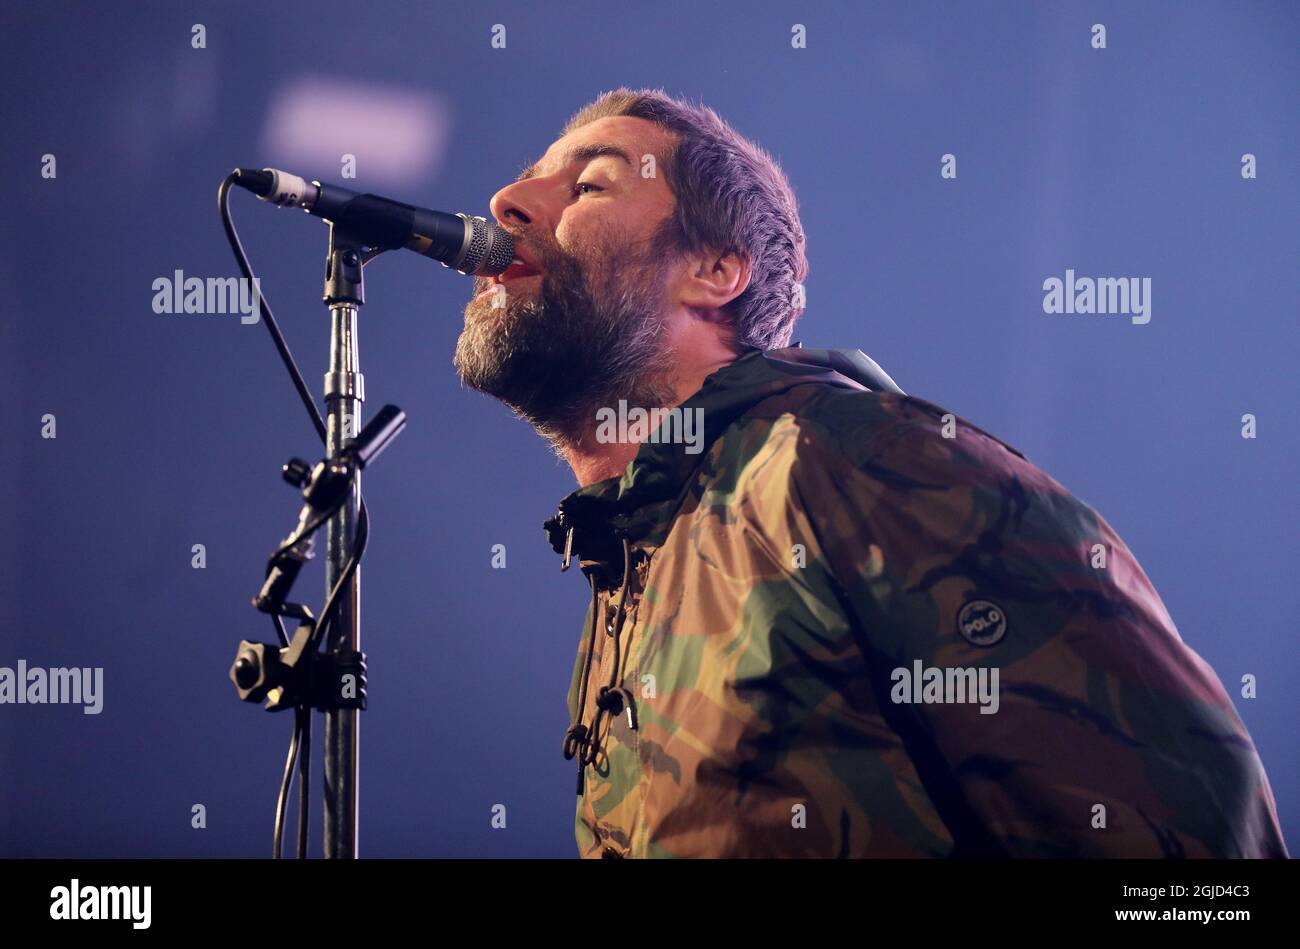 Liam Gallagher performs during a concert in Annexet Globen, Stockholm, Sweden, February 2, 20120 Photo Mattias Hansson / TT Kod 2832 Stock Photo